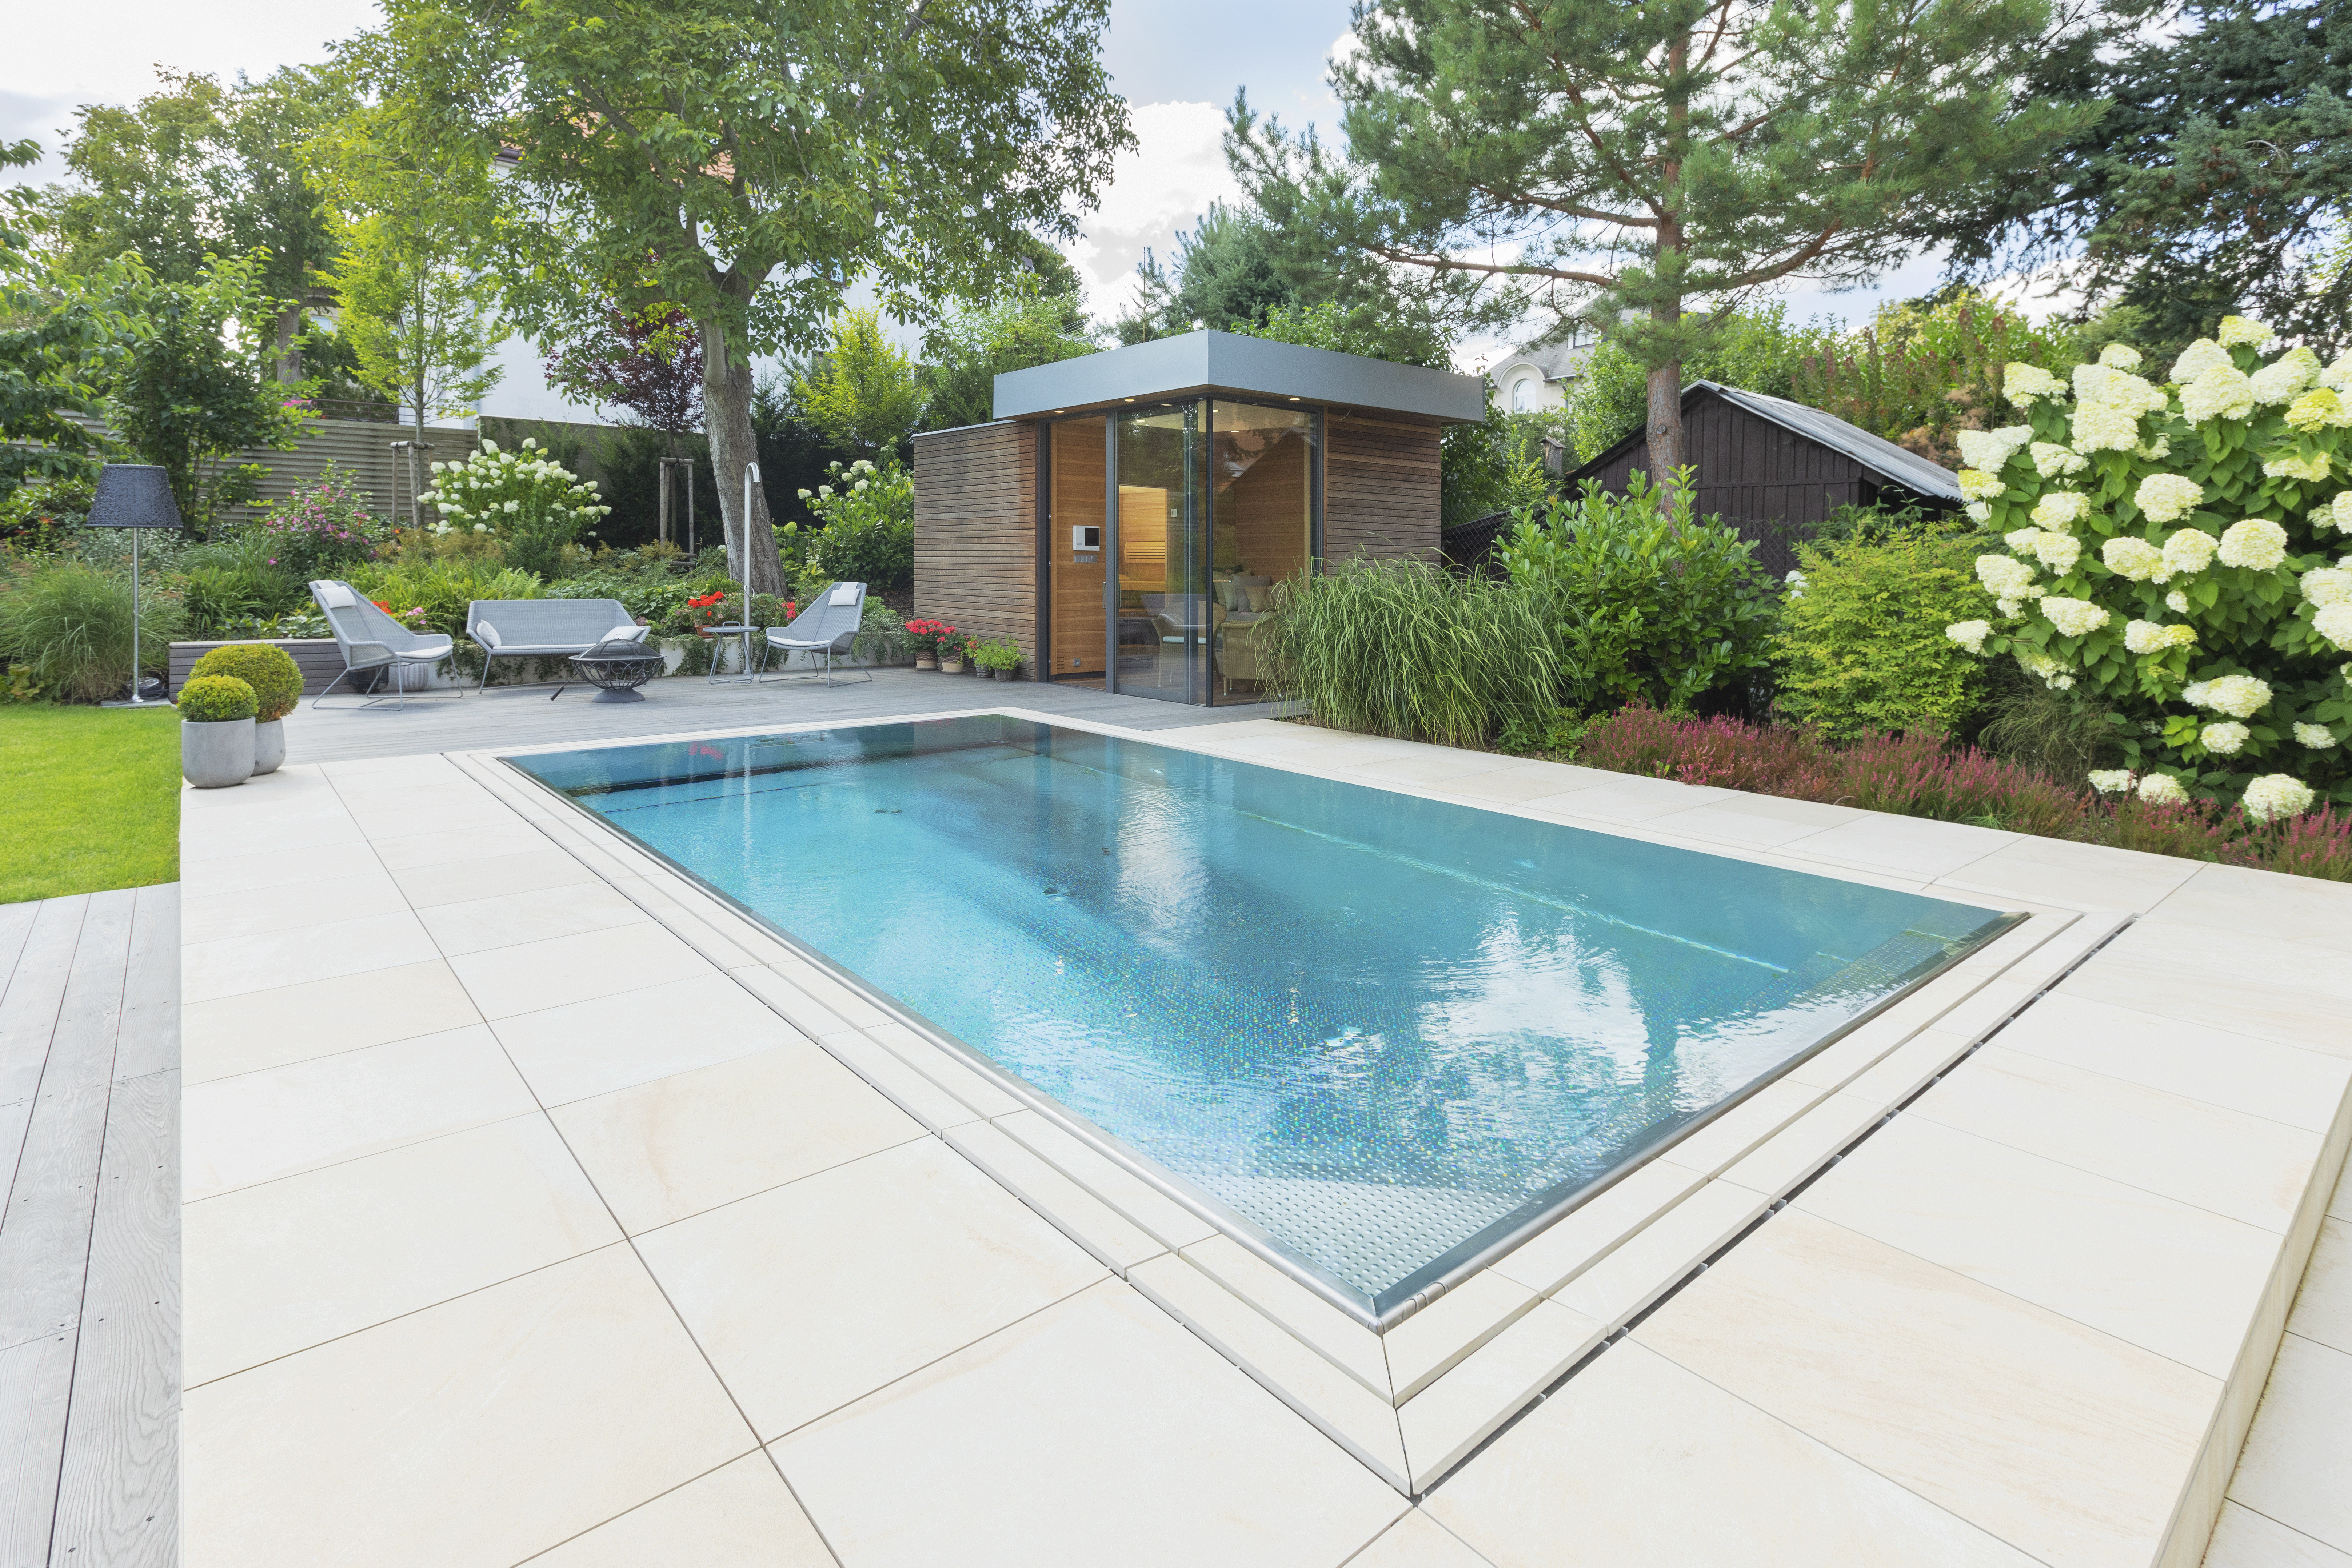 Stainless steel pool IMAGINOX with outdoor sauna